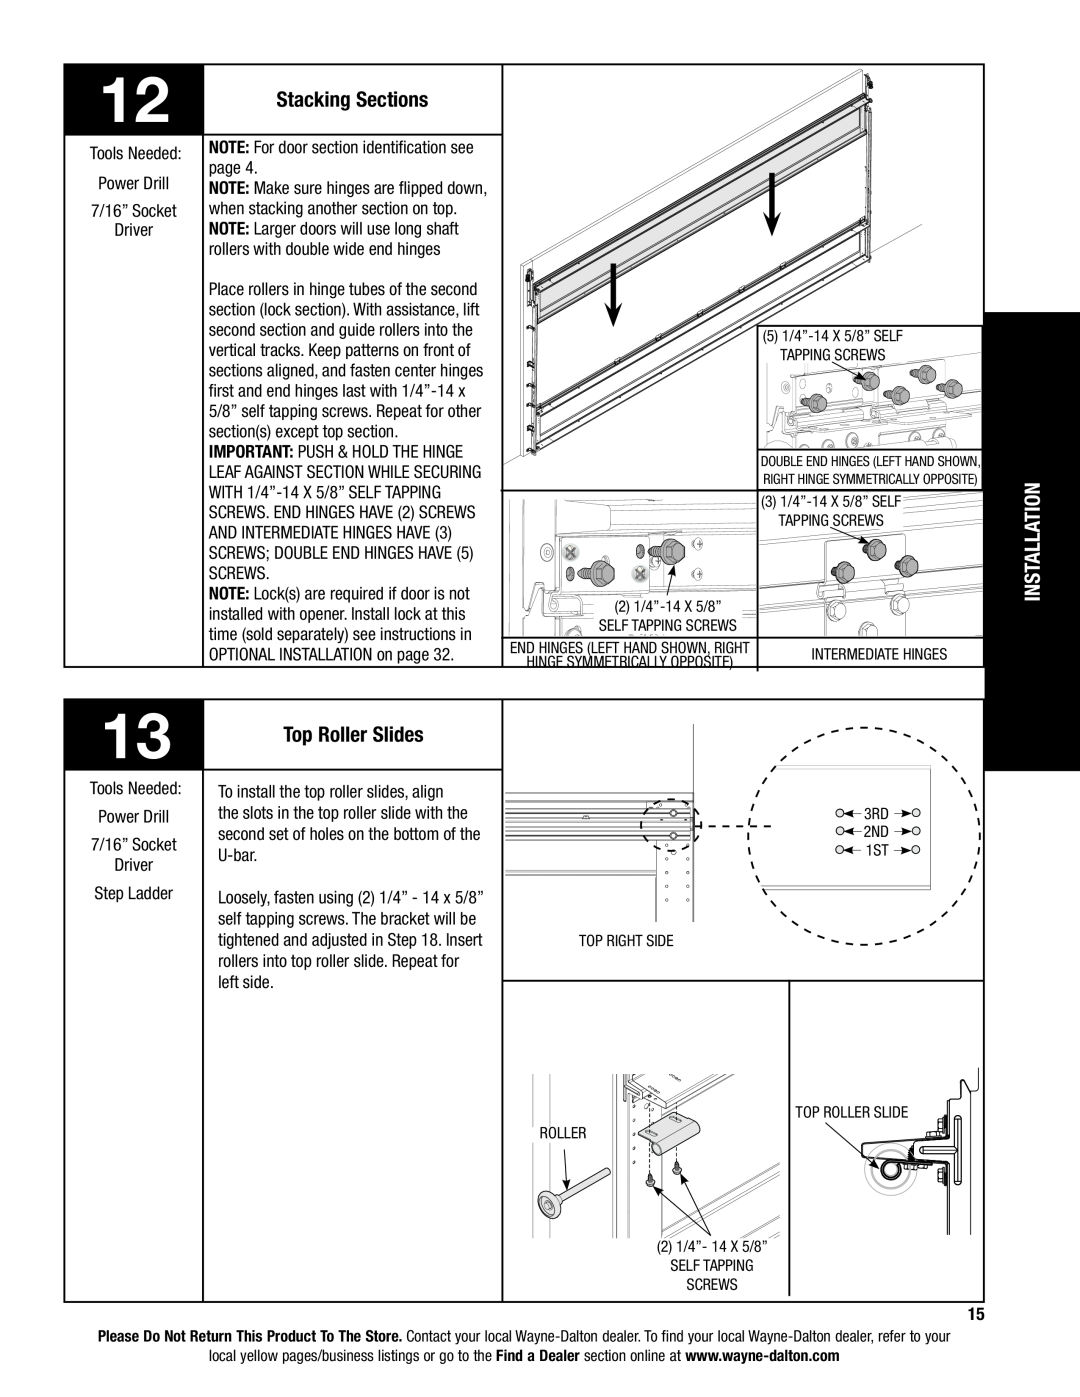 Wayne-Dalton 6100 installation instructions Stacking Sections, Top Roller Slides, Installation 